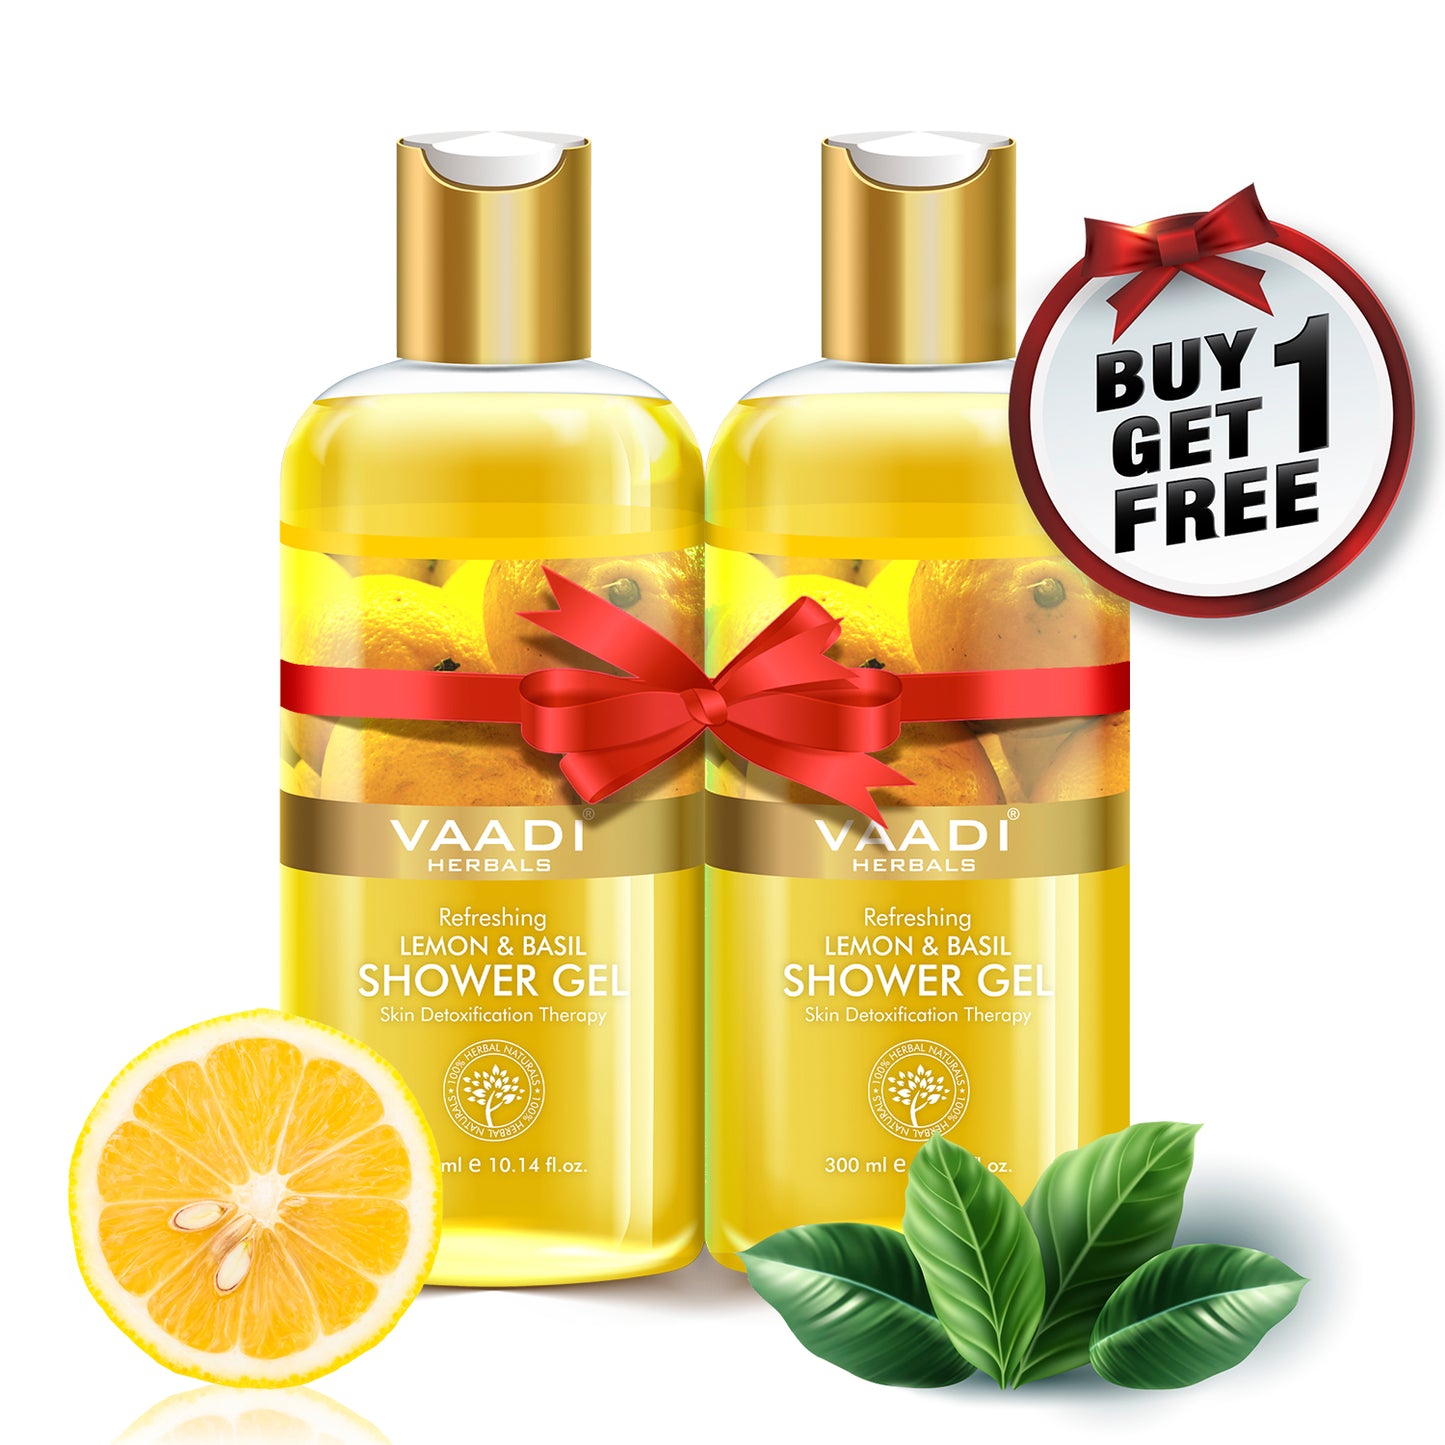 Organic Lemon & Basil Shower Gel - Skin Detoxifying - Brightens Skin (2 x 300 ml / 10.2 fl oz) - <span>(Buy 1 Get 1 Free)</span>